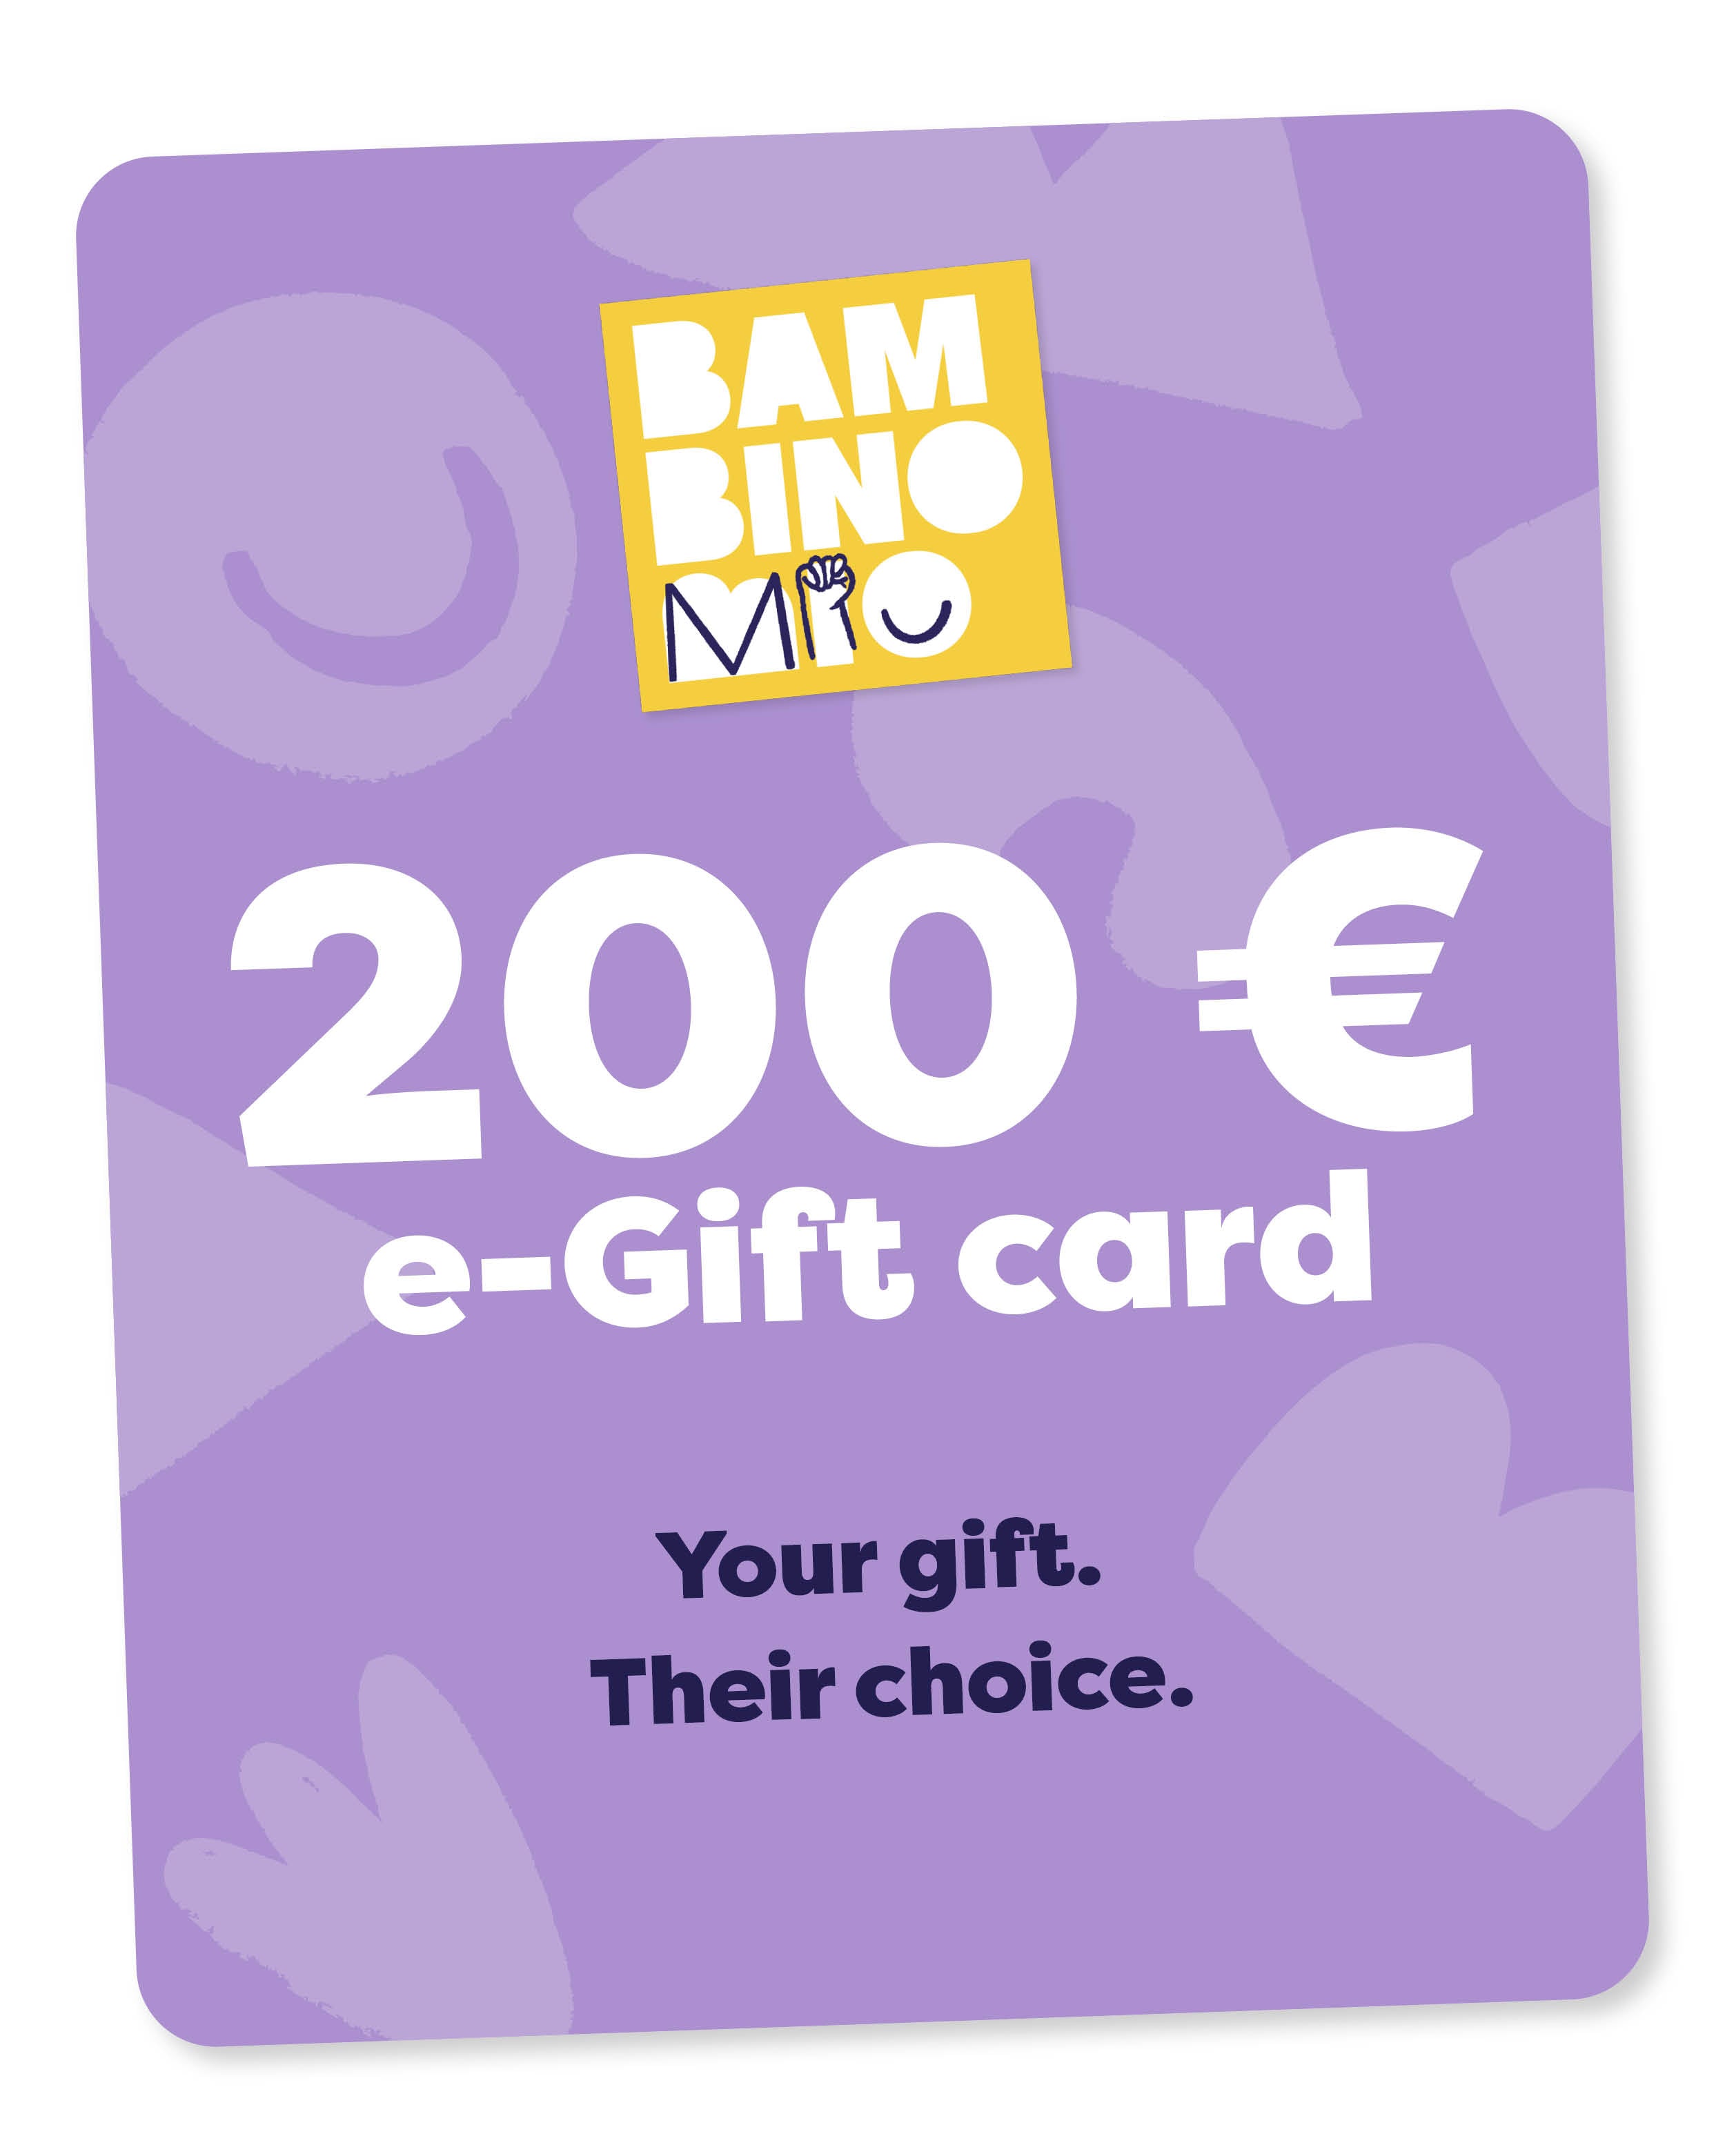 Bambino Mio e-gift card - Bambino Mio (EU)